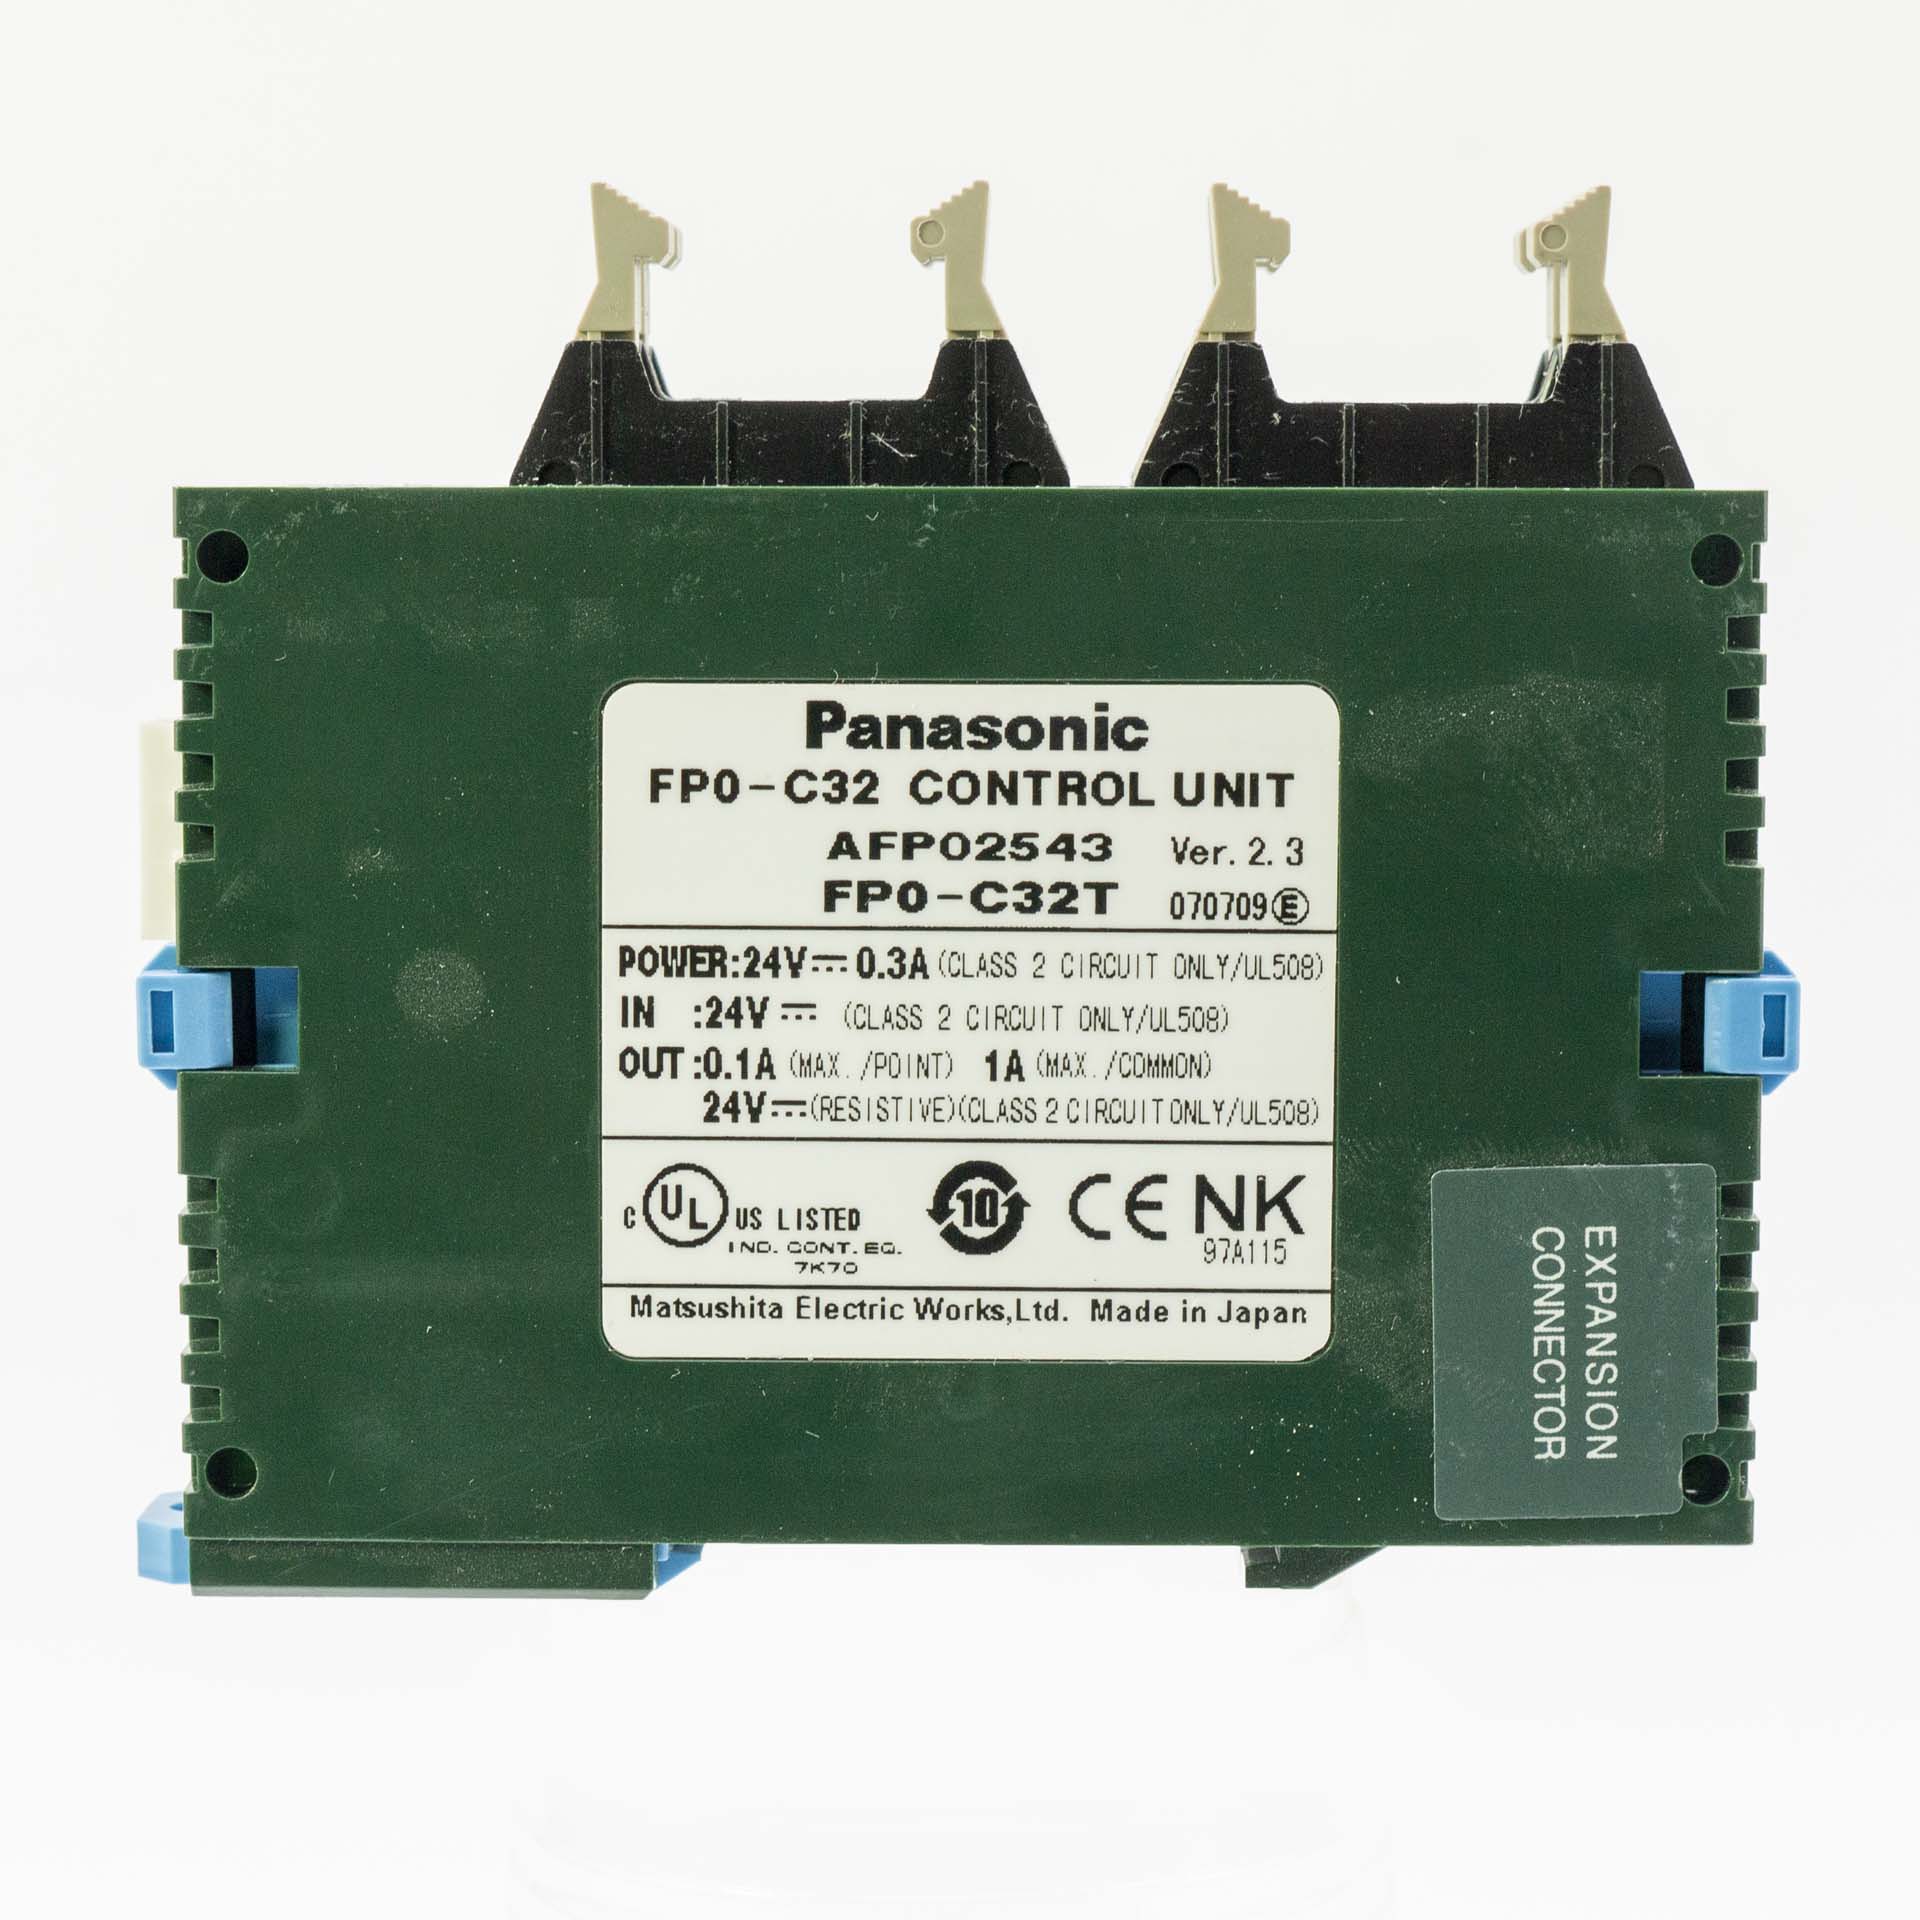 Panasonic FP0-C32T v2.3